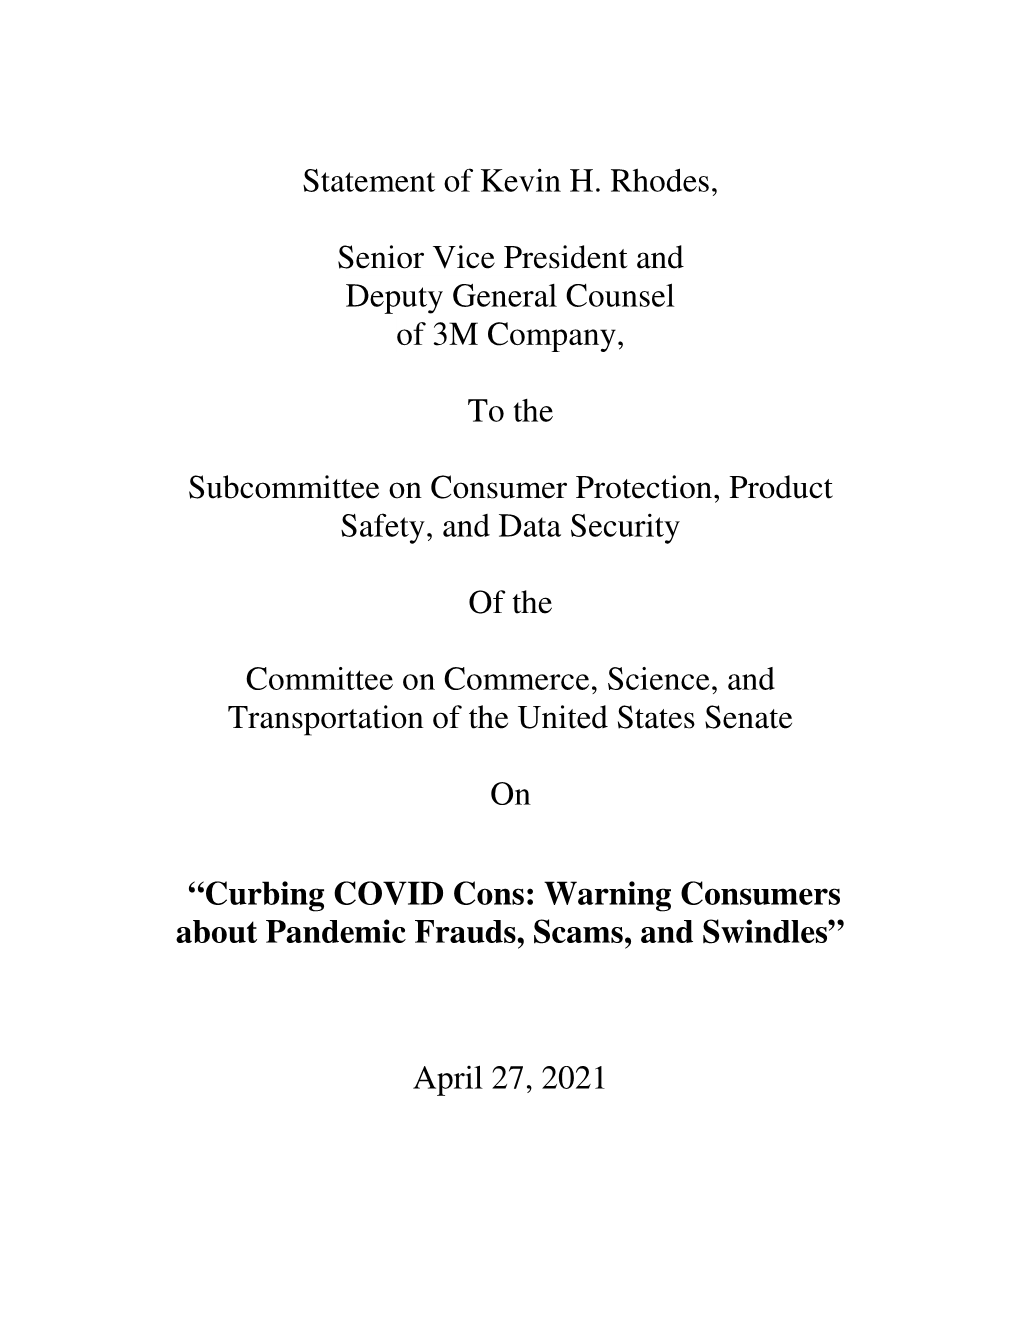 Kevin Rhodes Written Testimony April 27. 2021